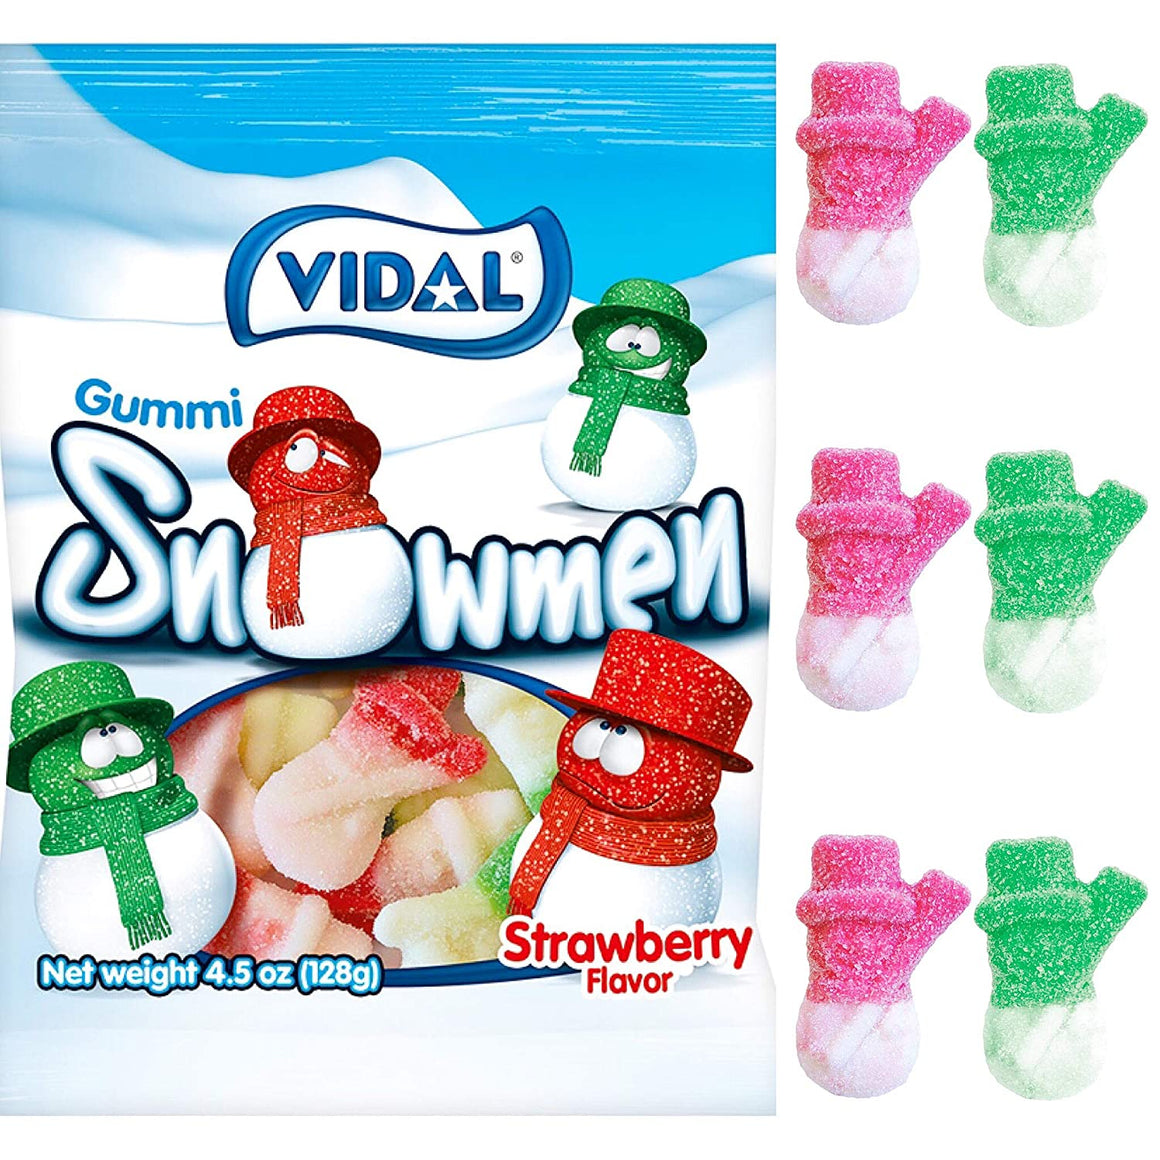 All City Candy Gummi Snowmen - 4.5-oz. Bag Vidal For fresh candy and great service, visit www.allcitycandy.com